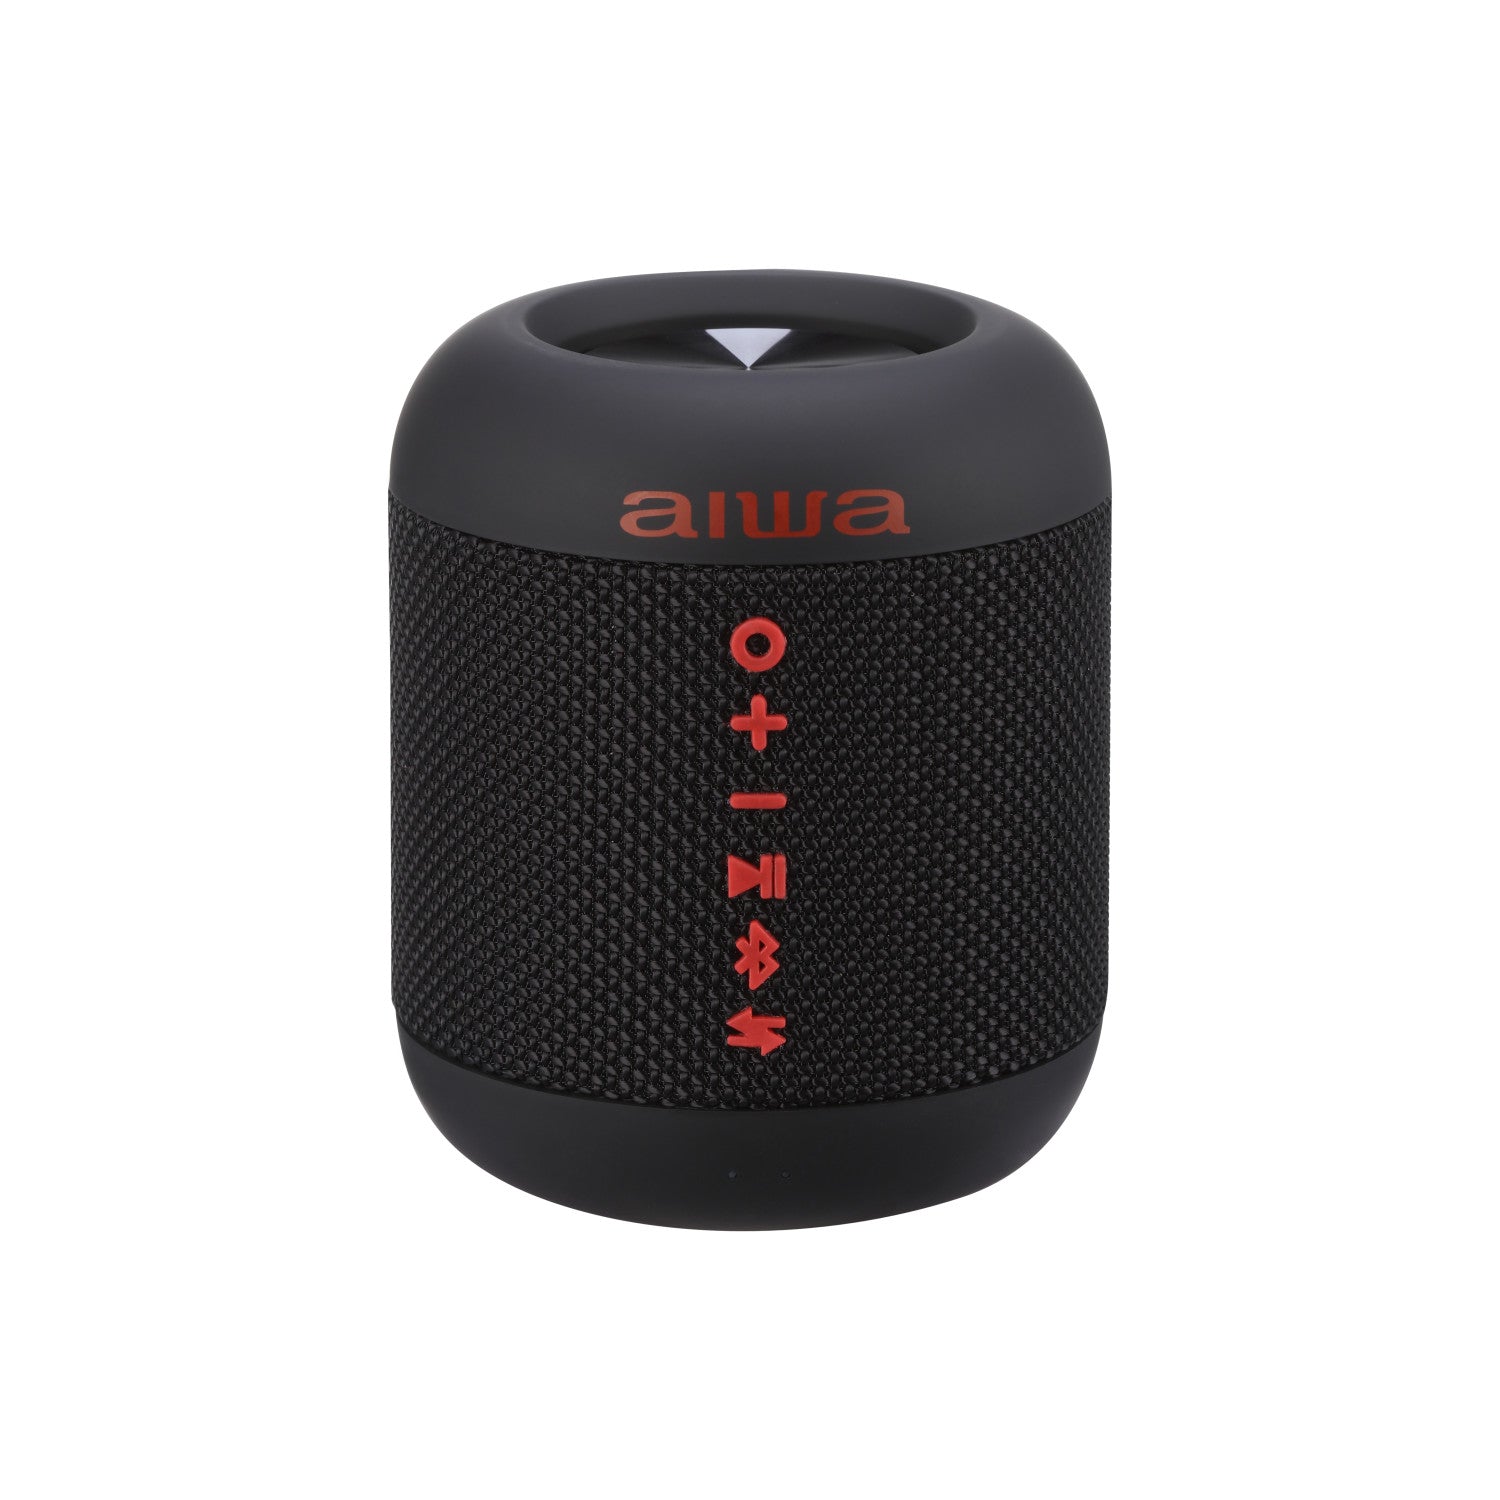 AIWA Radio 9 pulgadas Aiwa 2 DIN Android 12 BT/WIFI/USB A900BS